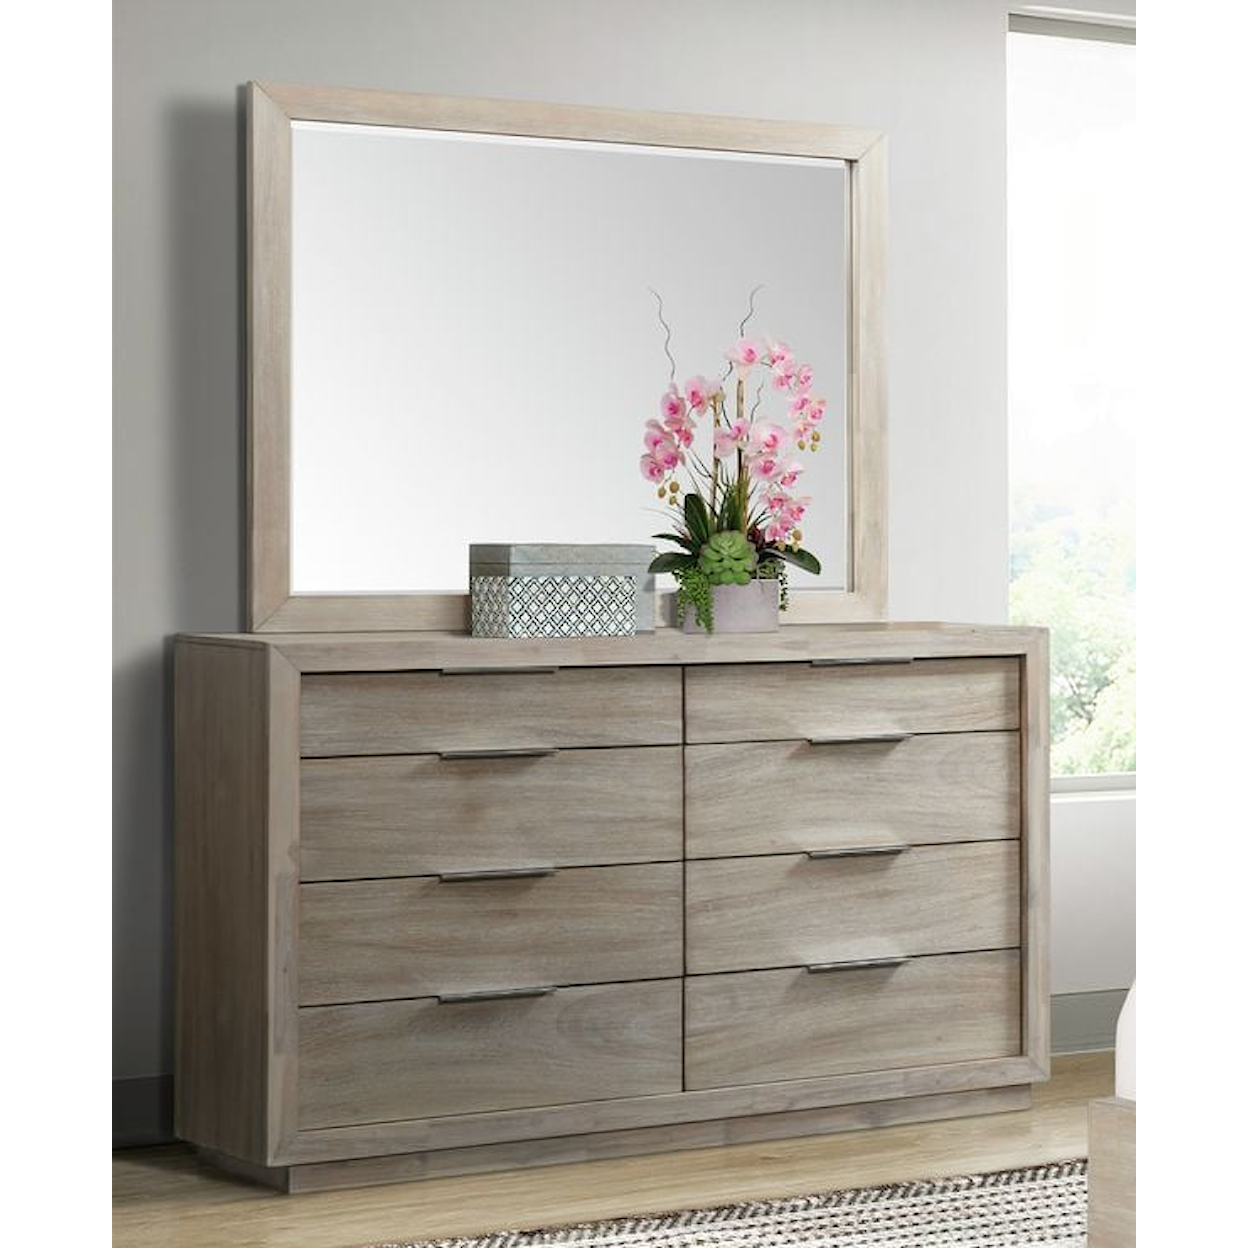 Elements International Arcadia 8-Drawer Bedroom Dresser